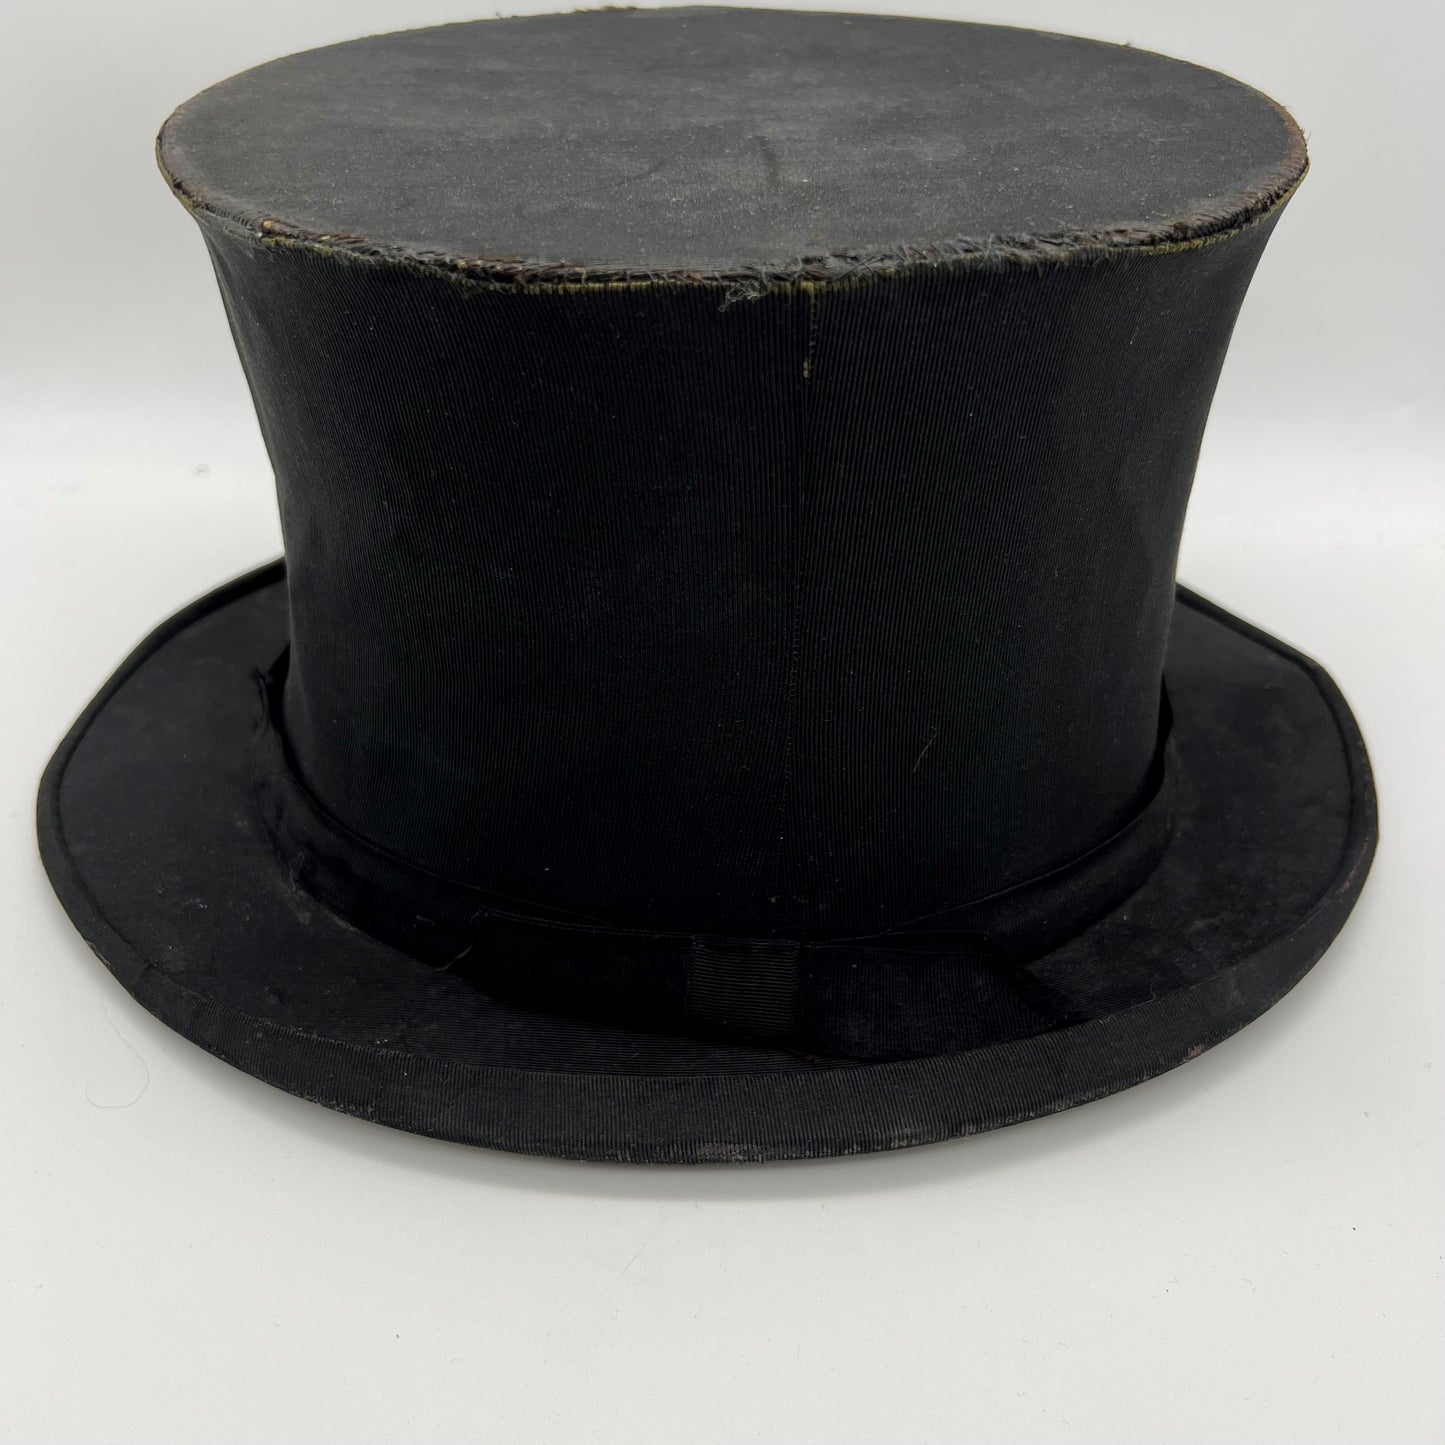 Marshall Field’s Antique Silk Top Hat